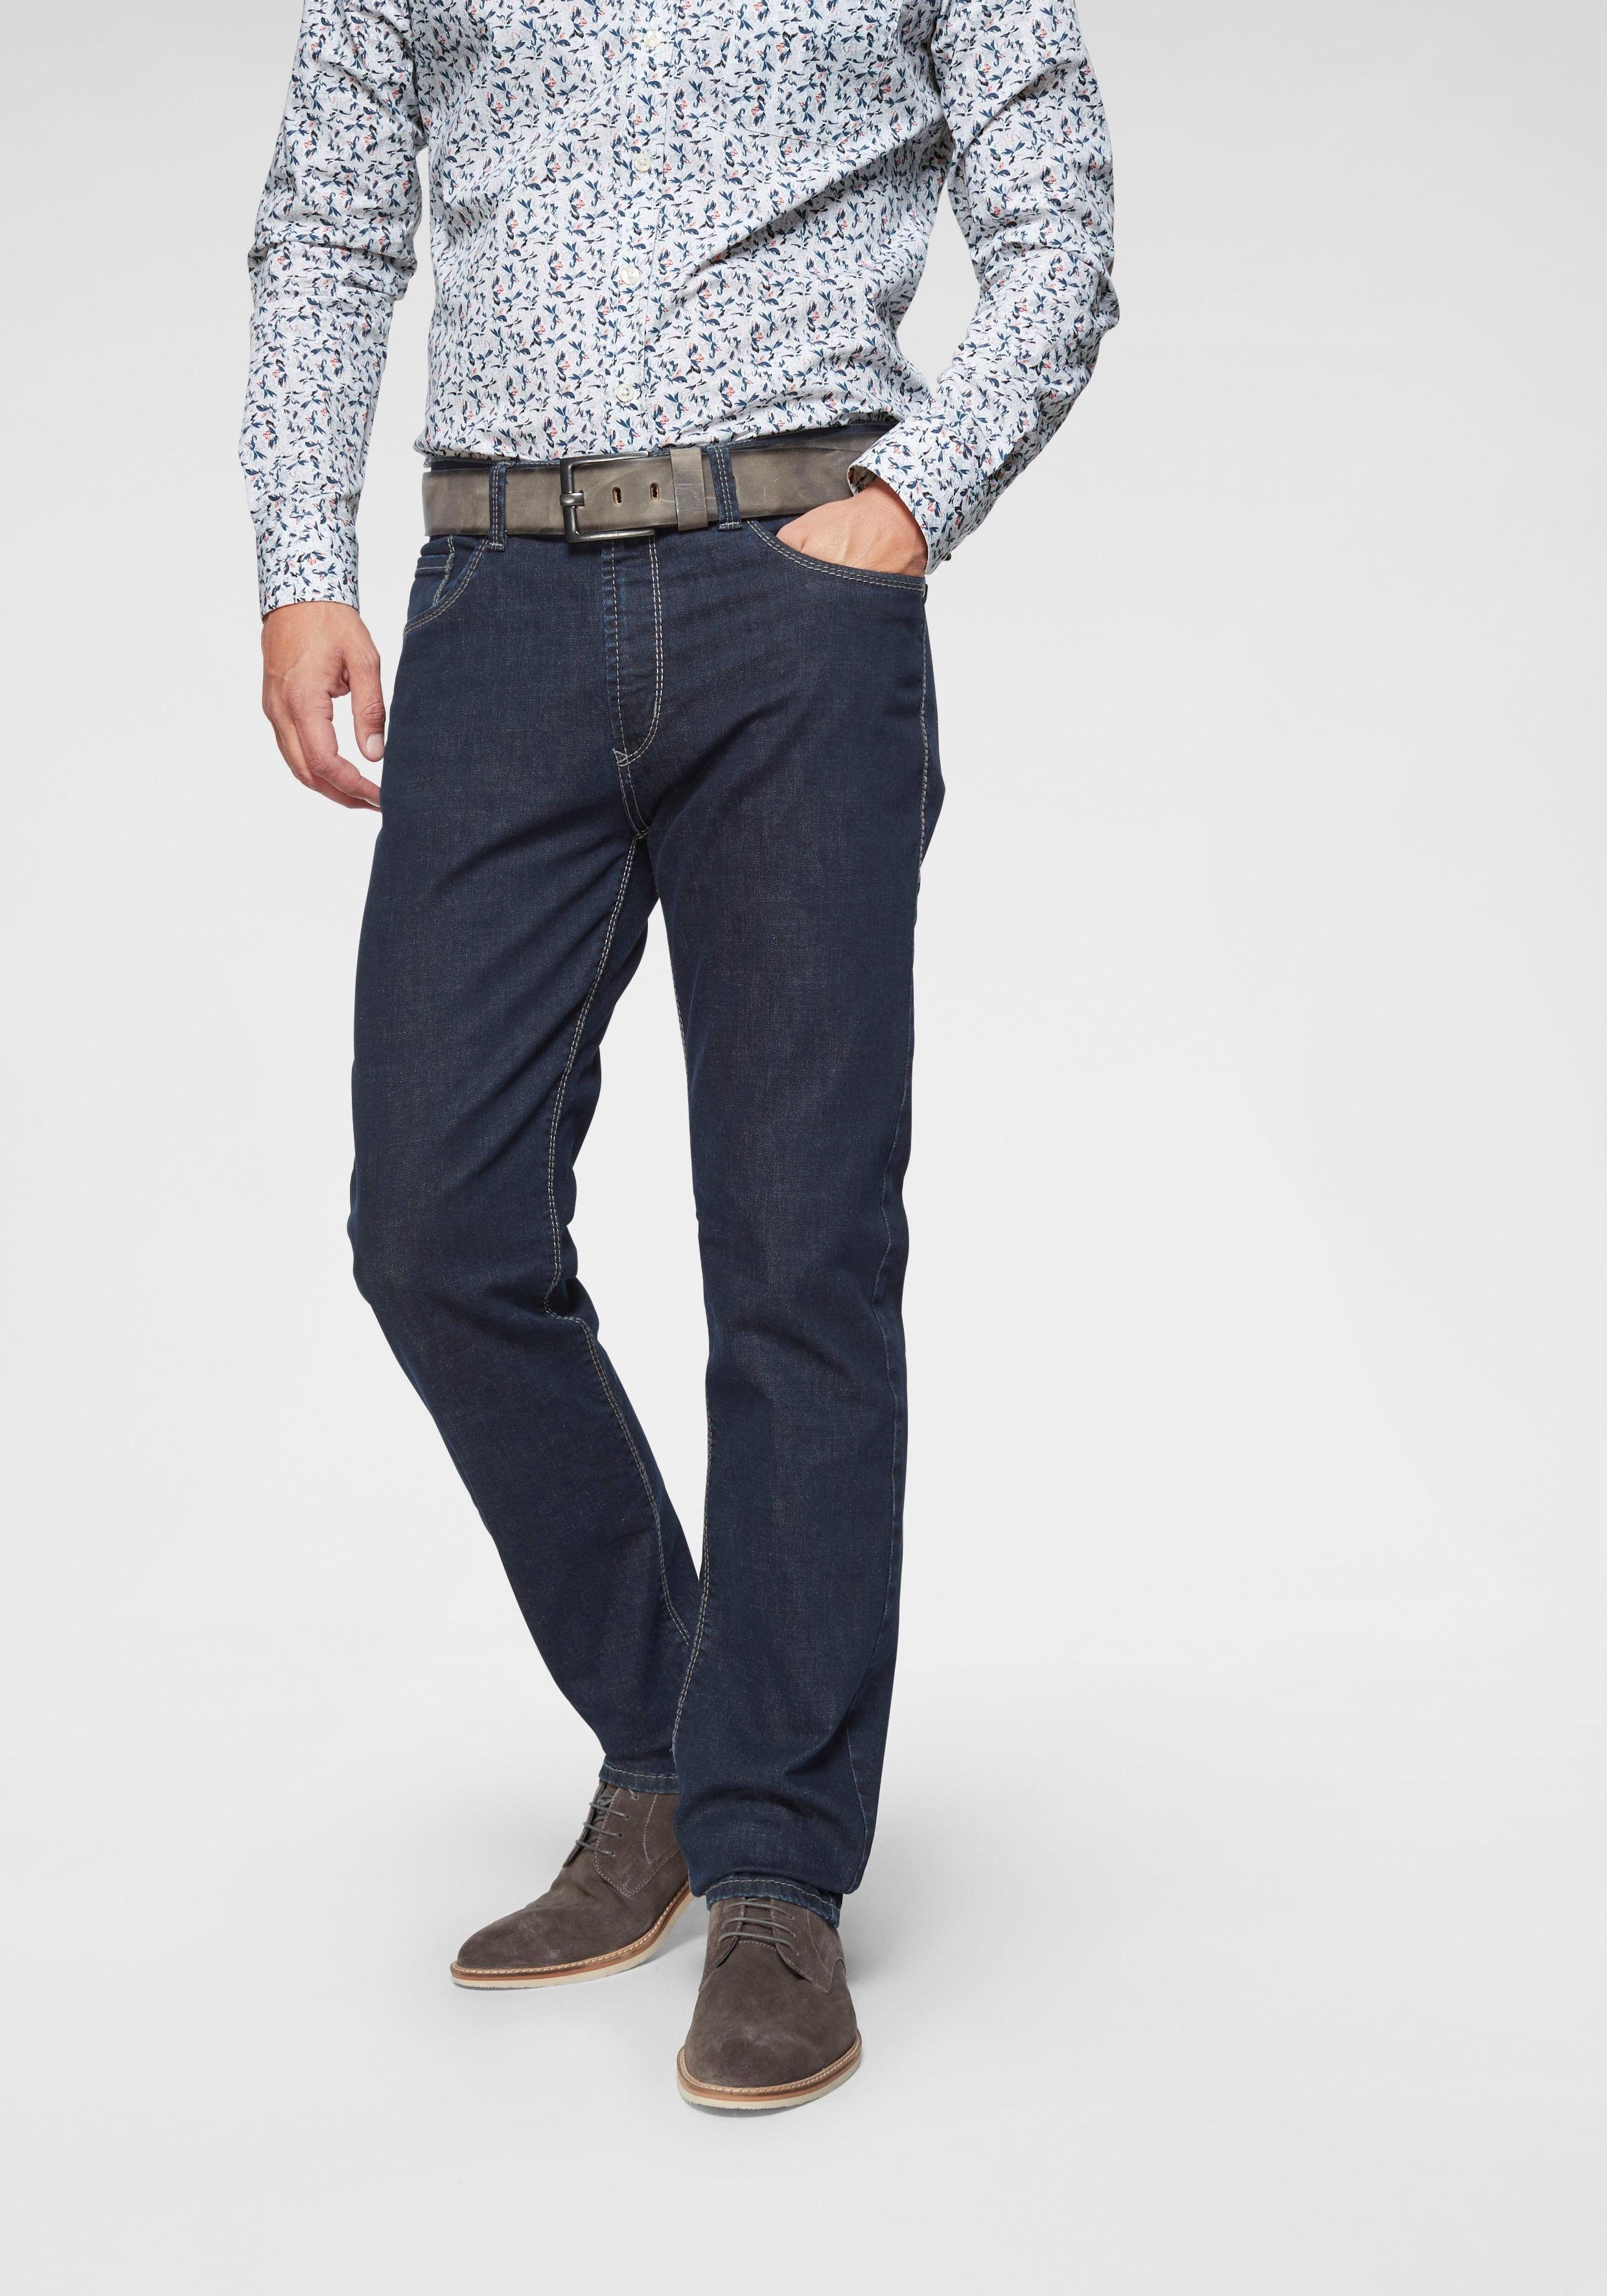 Pionier 5-Pocket-Jeans »Thomas« mit Stretch kaufen | OTTO